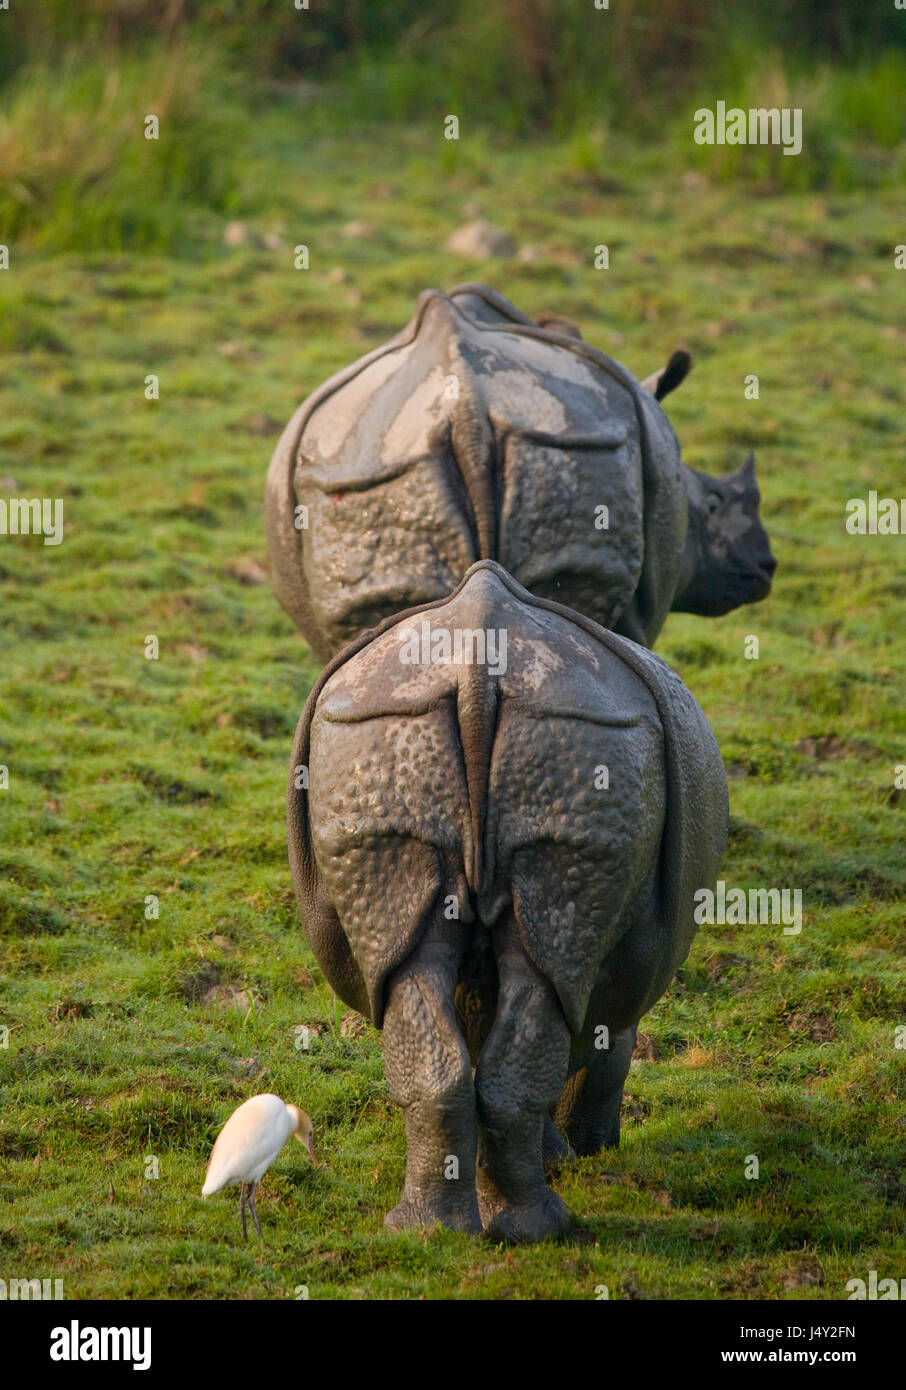 Two Wild Great one-horned rhinoceroses in a national park. India. Kaziranga National Park. Stock Photo